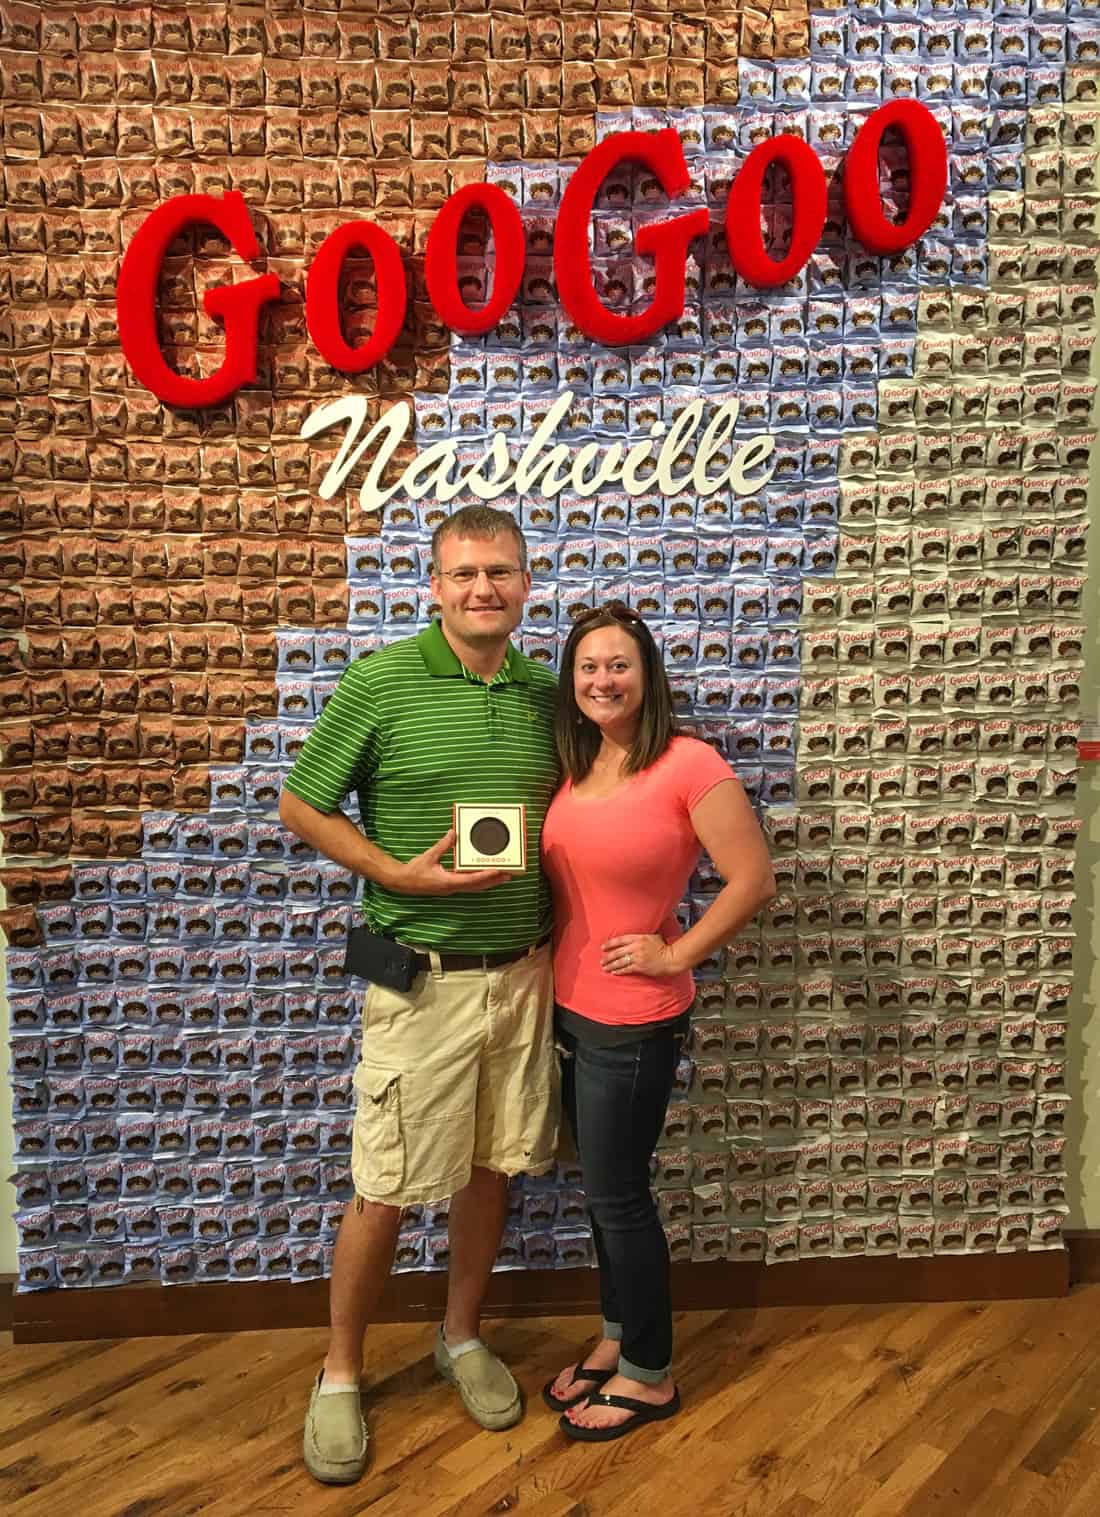 Goo Goo Cluster celebrates 110 years in Nashville, Tennessee